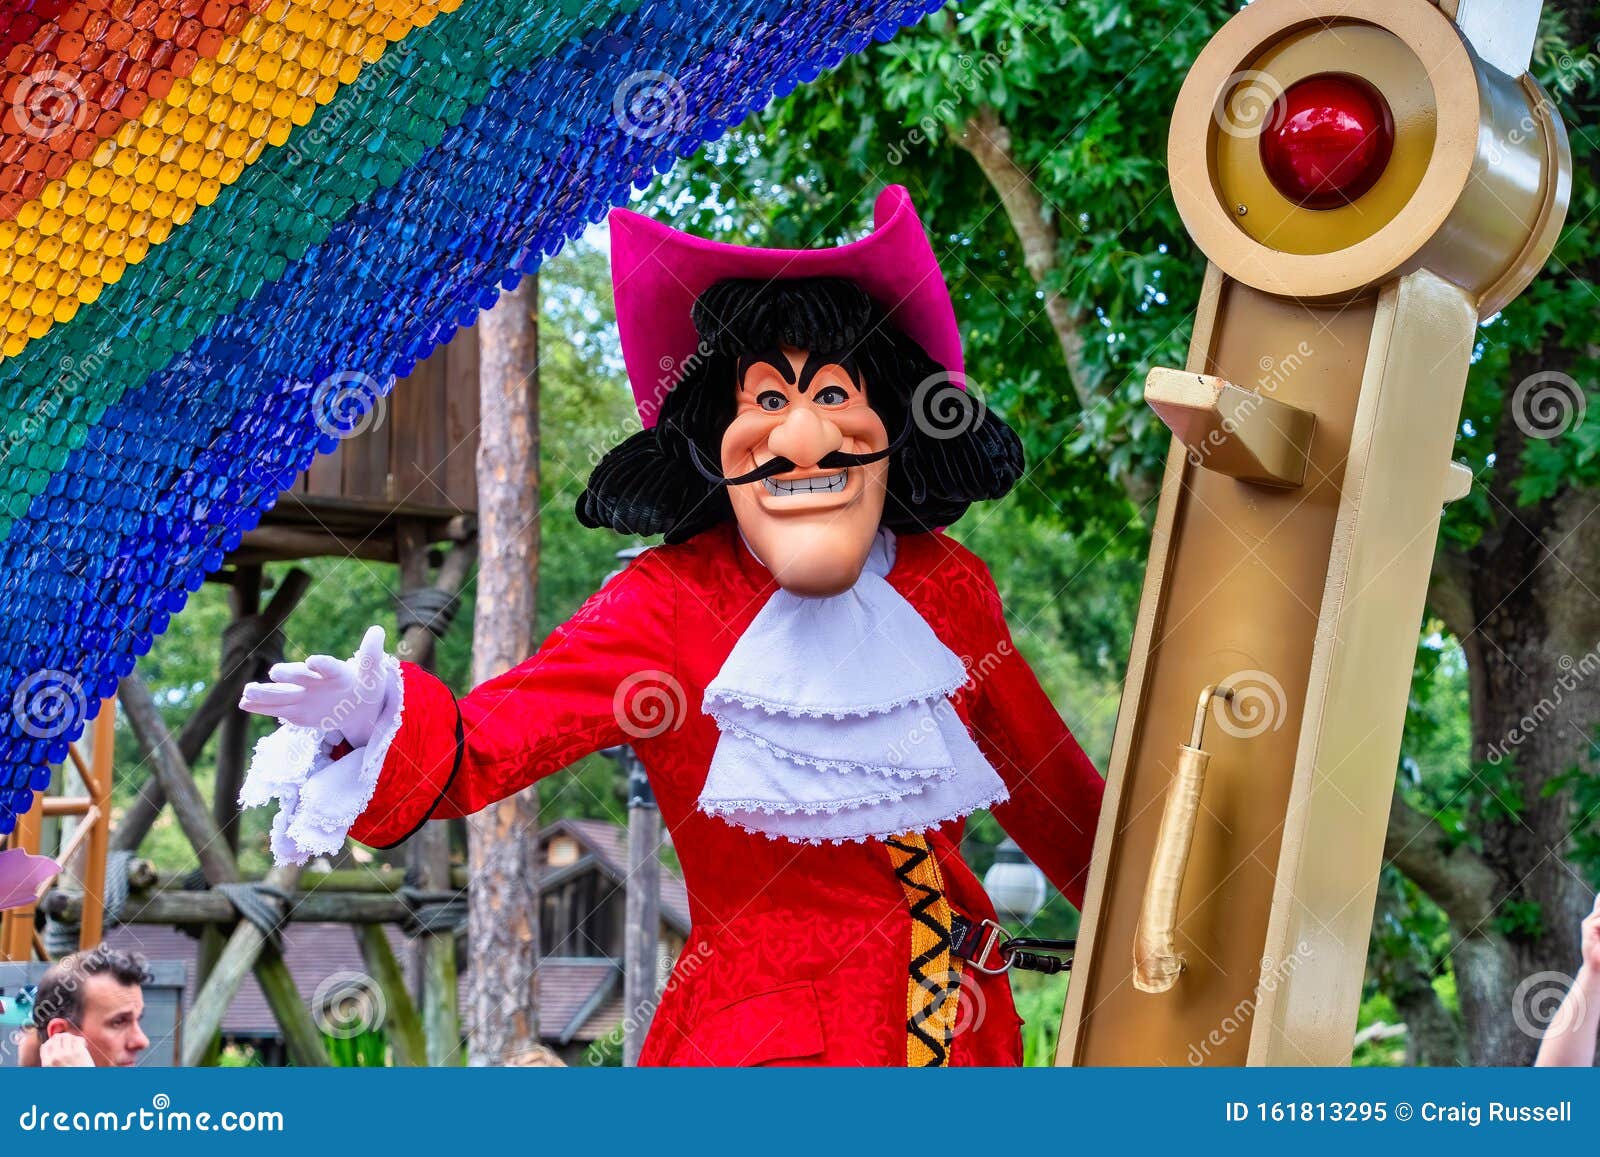 https://thumbs.dreamstime.com/z/captain-hook-character-festival-fantasy-parade-captain-hook-character-festival-fantasy-parade-magic-161813295.jpg